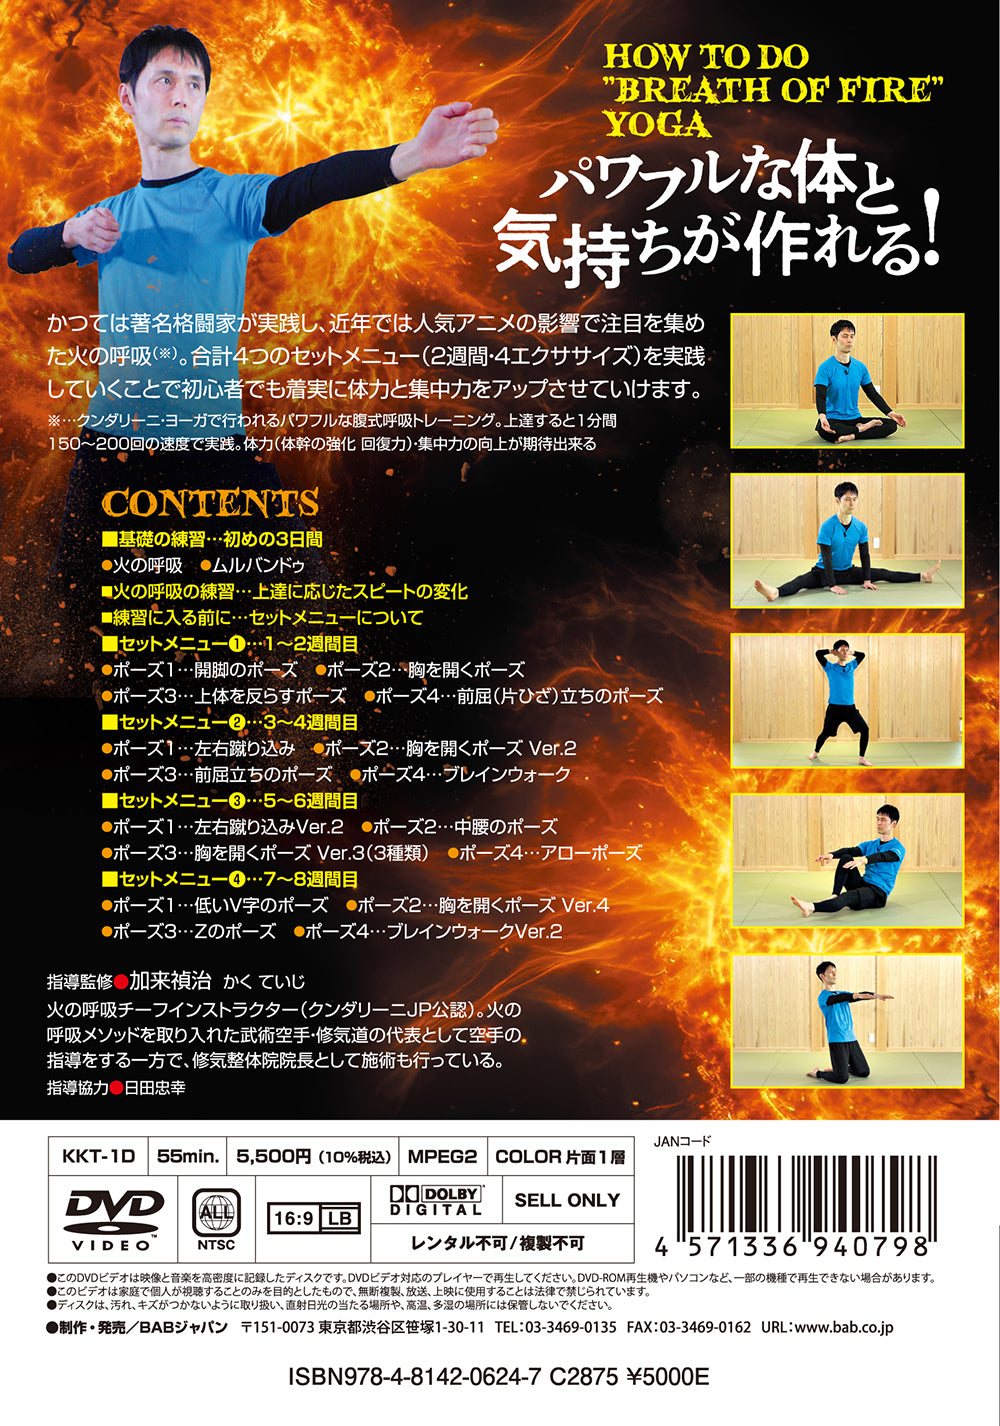 How to do Breath of Fire Yoga DVD by Teiji Kaku